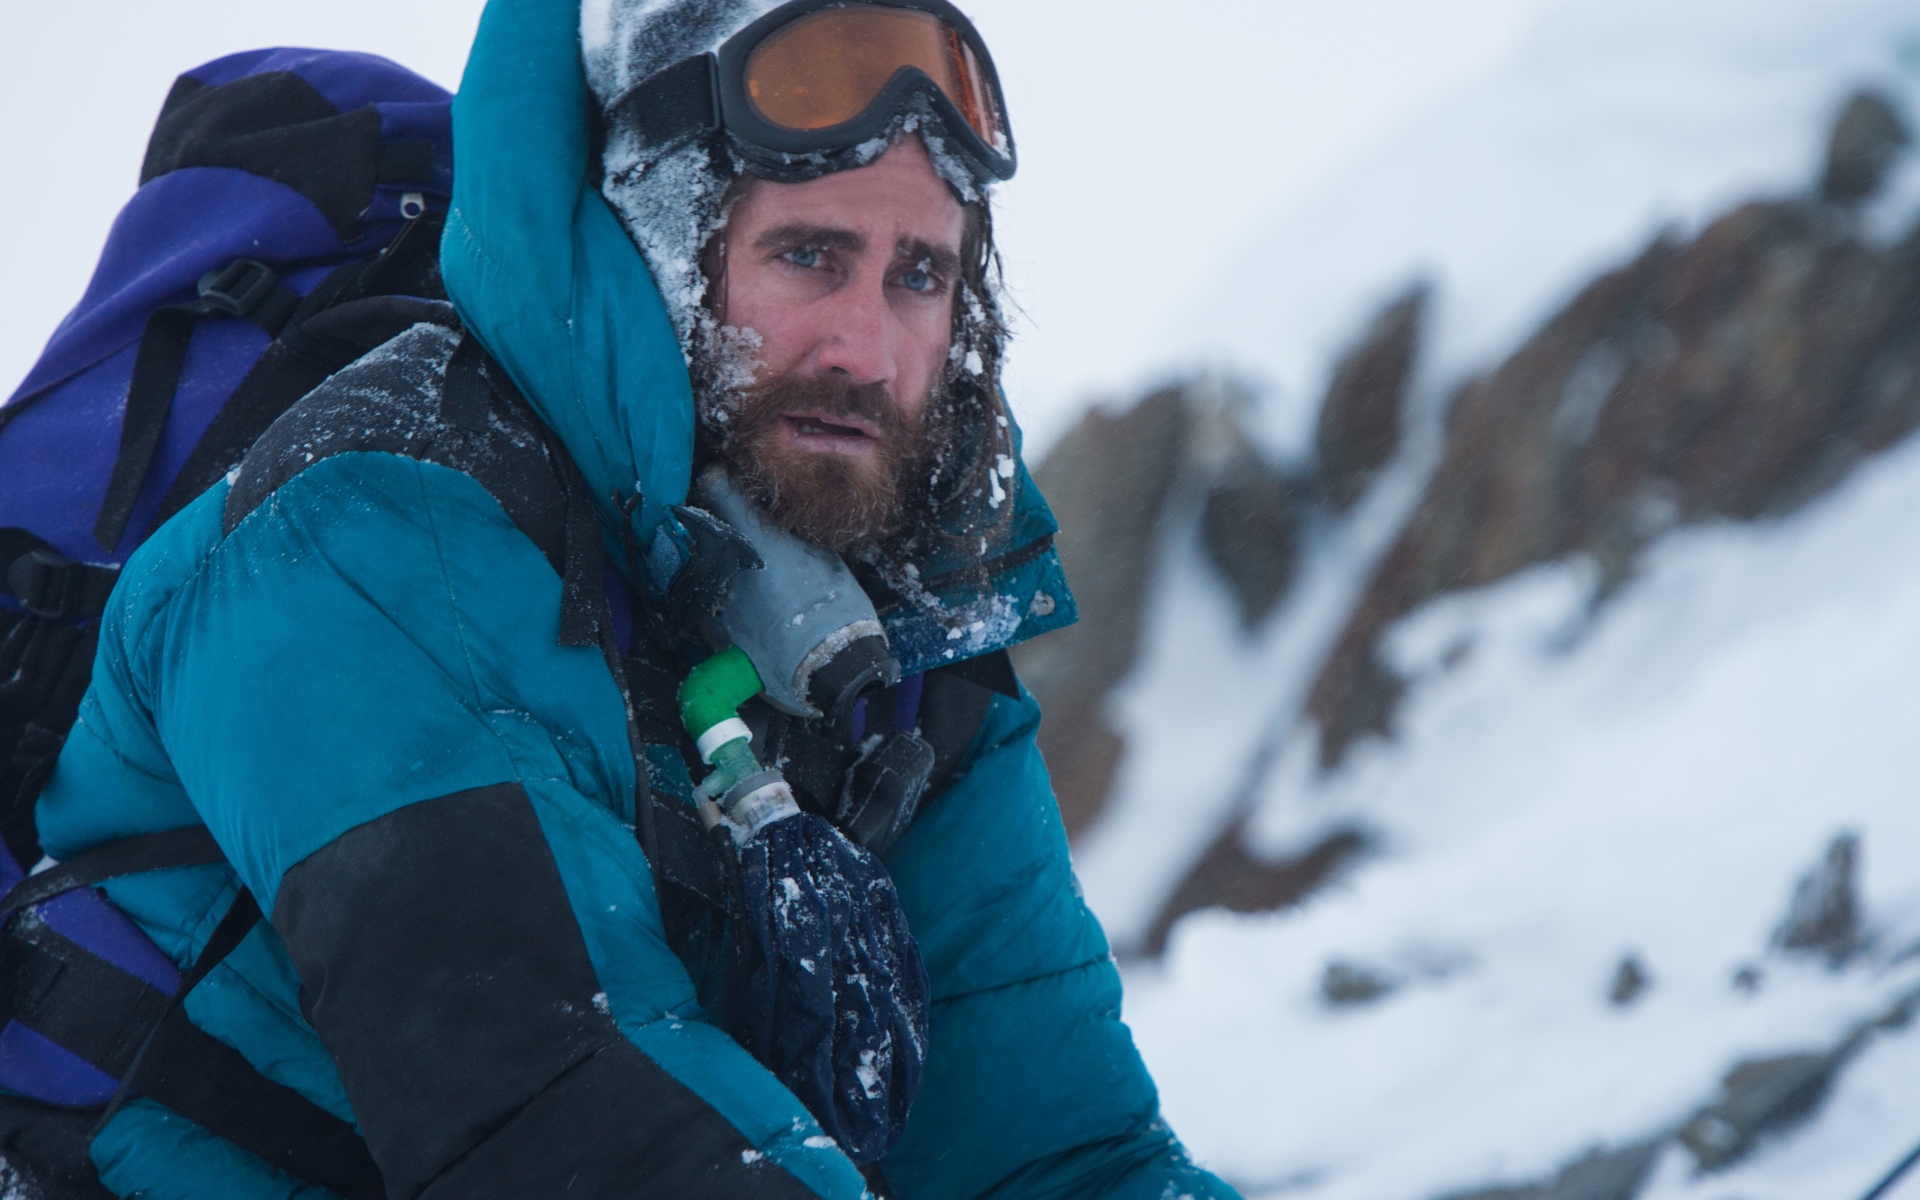 Everest Movie Jake Gyllenhaal for 1920 x 1200 widescreen resolution